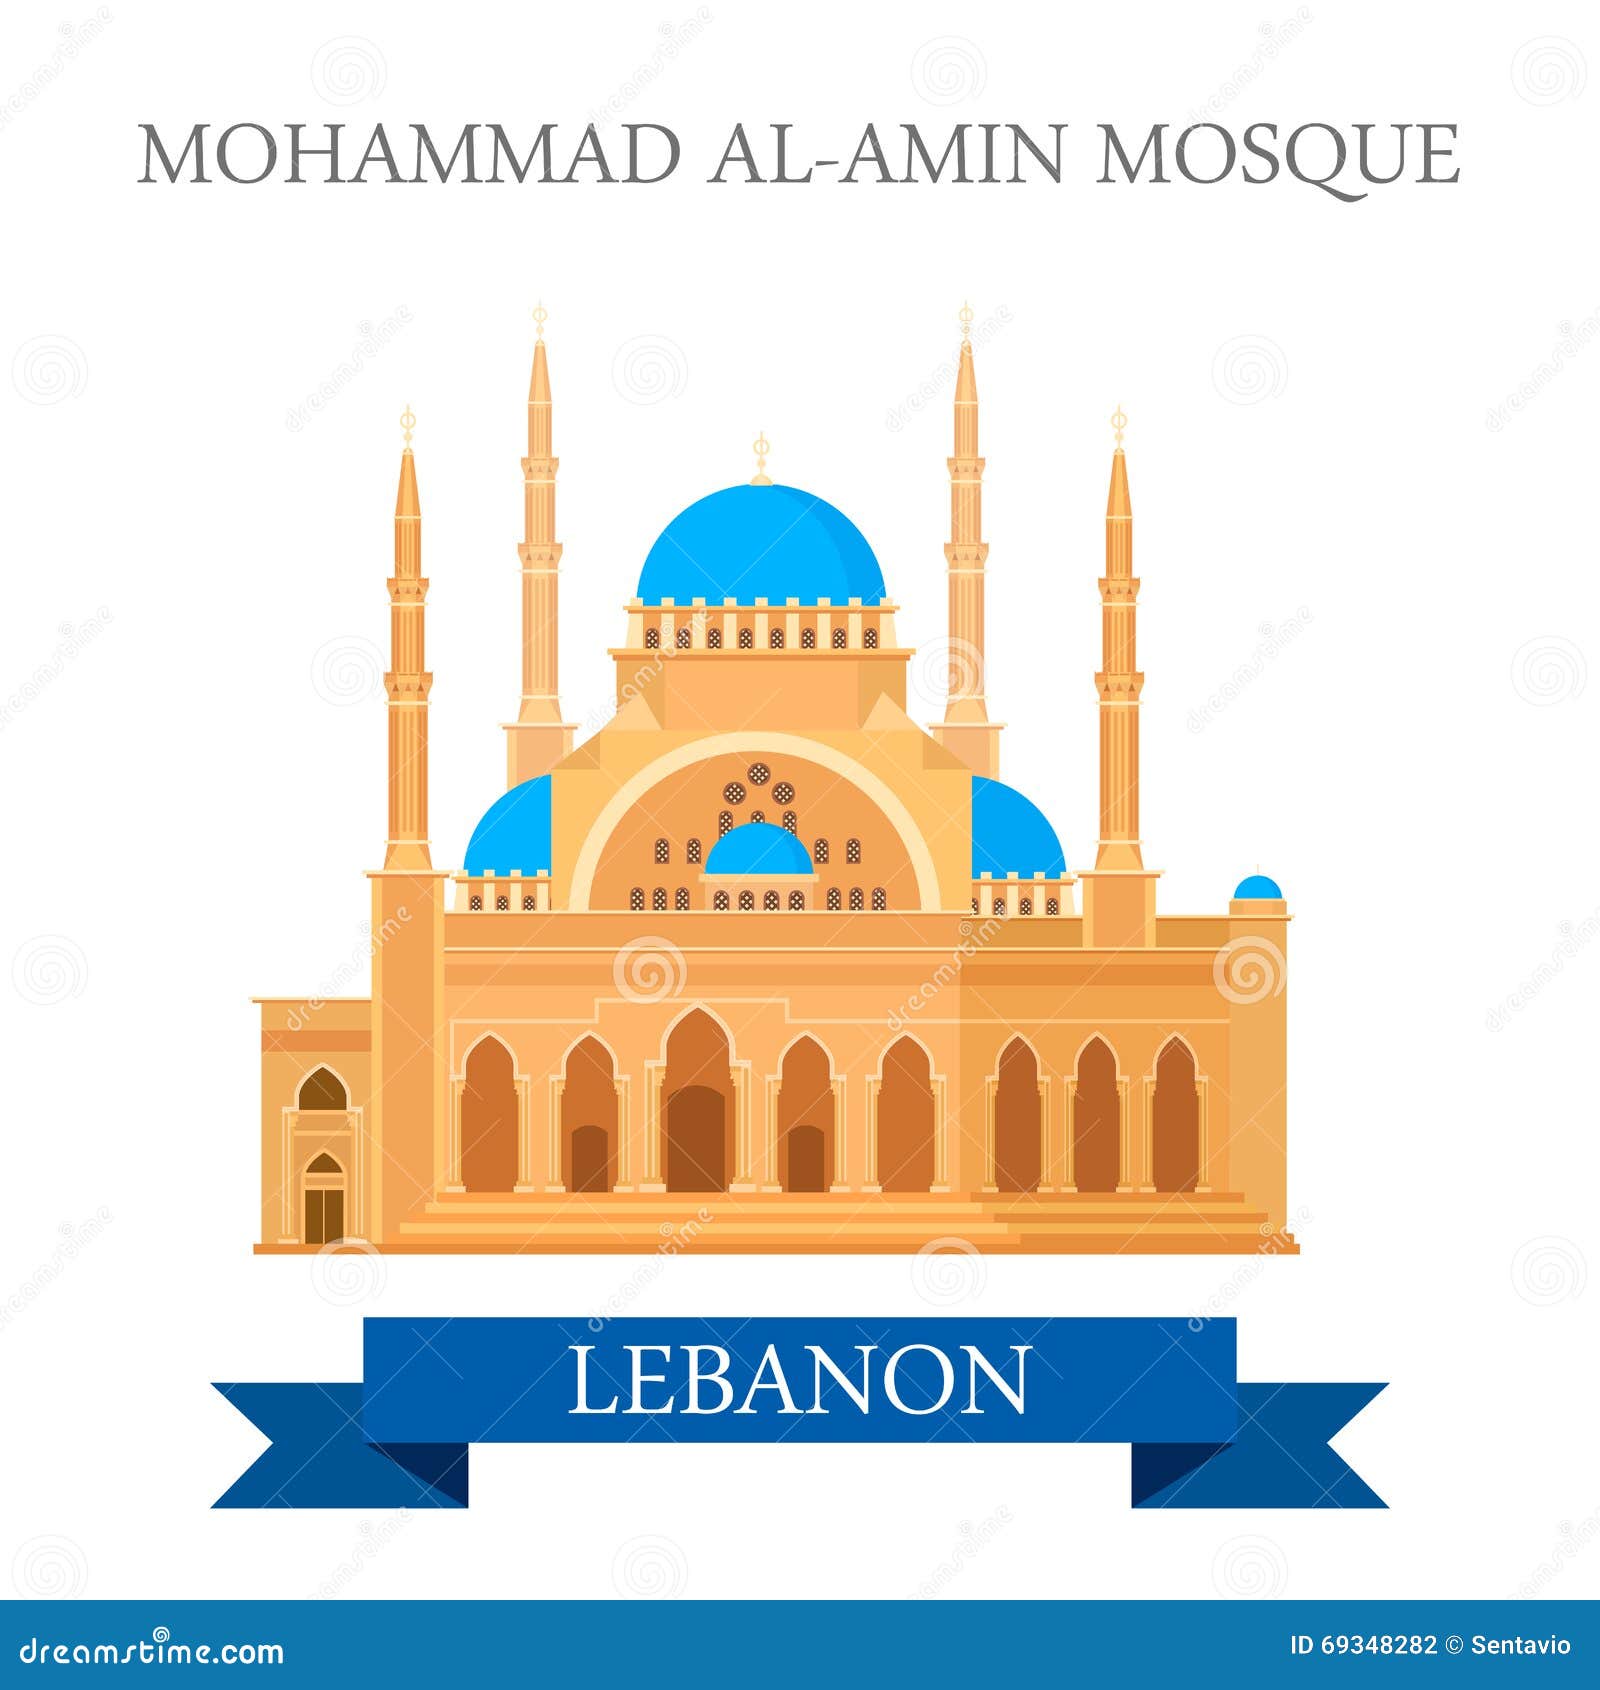 mohammad al-amin mosque lebanon attraction travel sightseeing